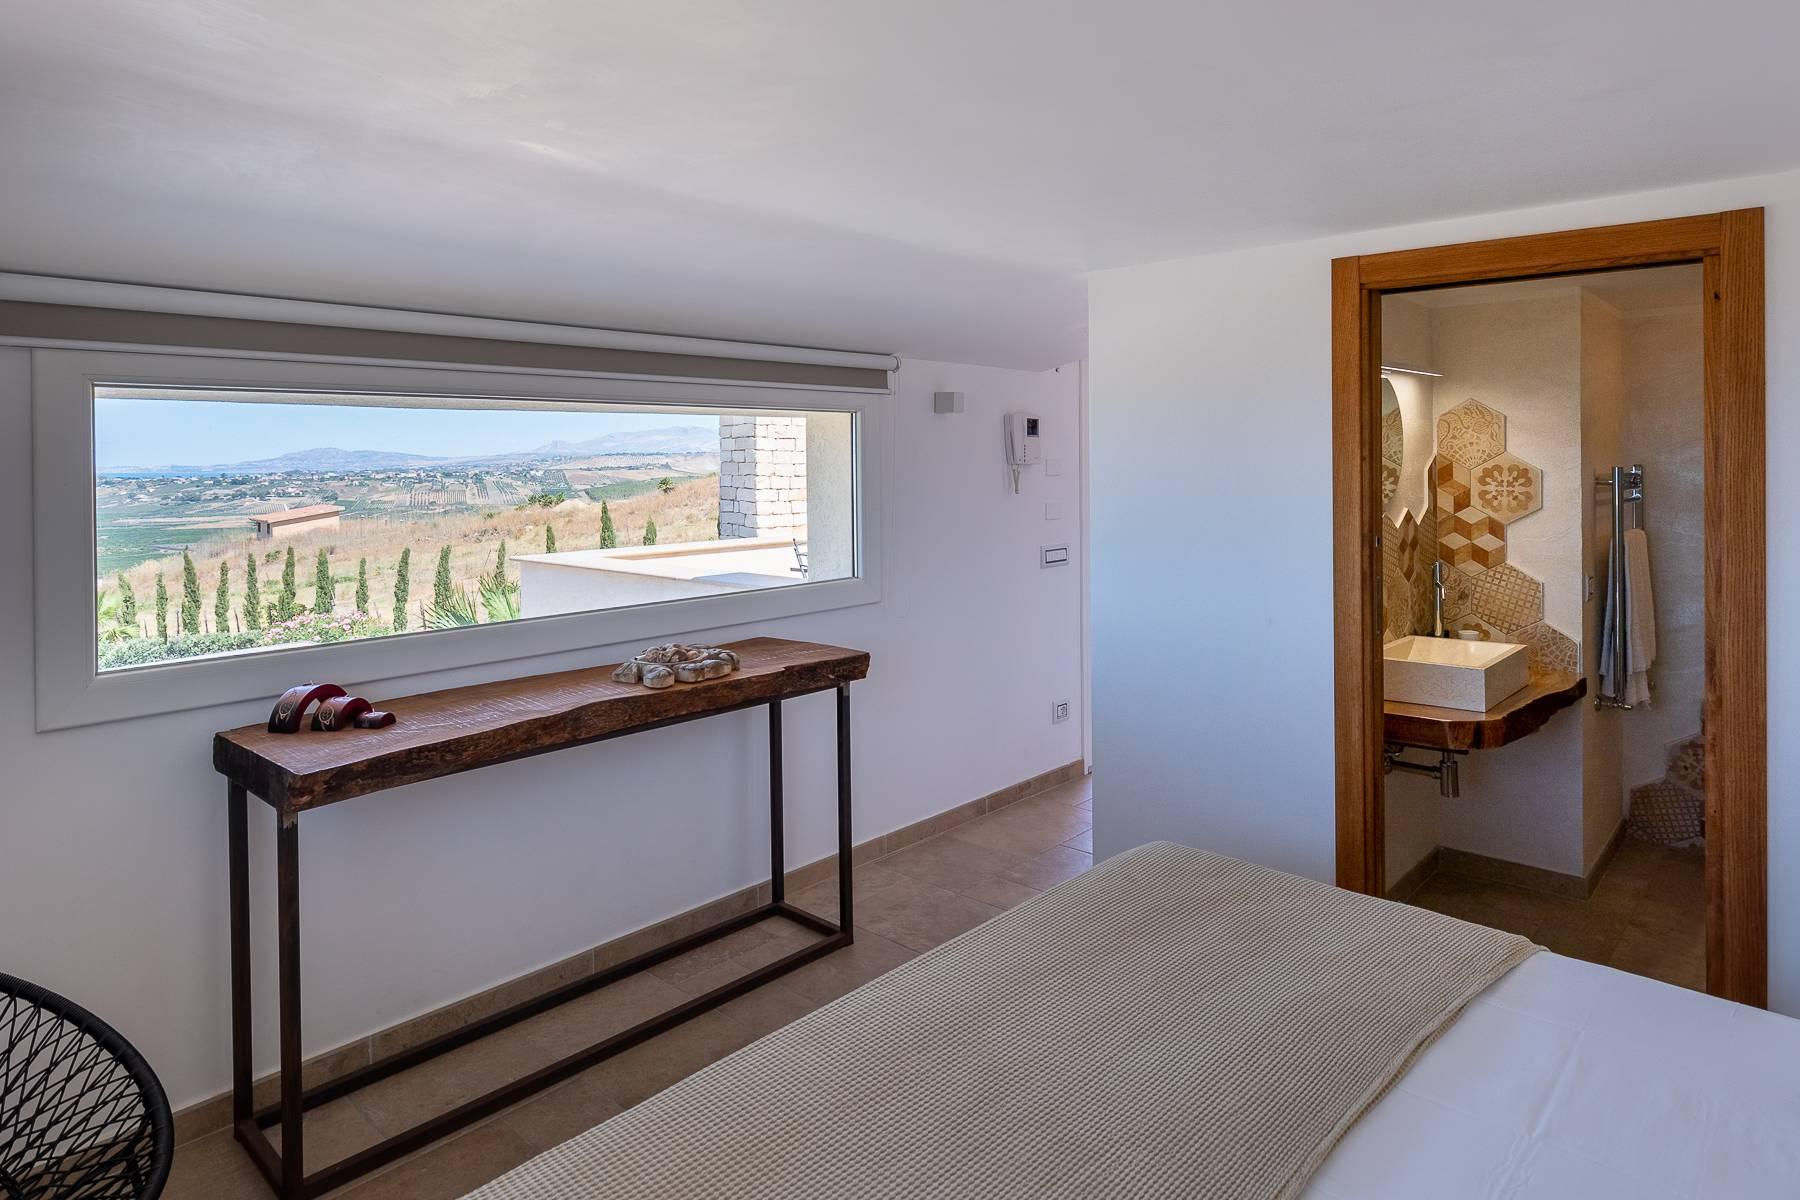 Exclusive villa with stunning views on the Mediterranean sea - 43